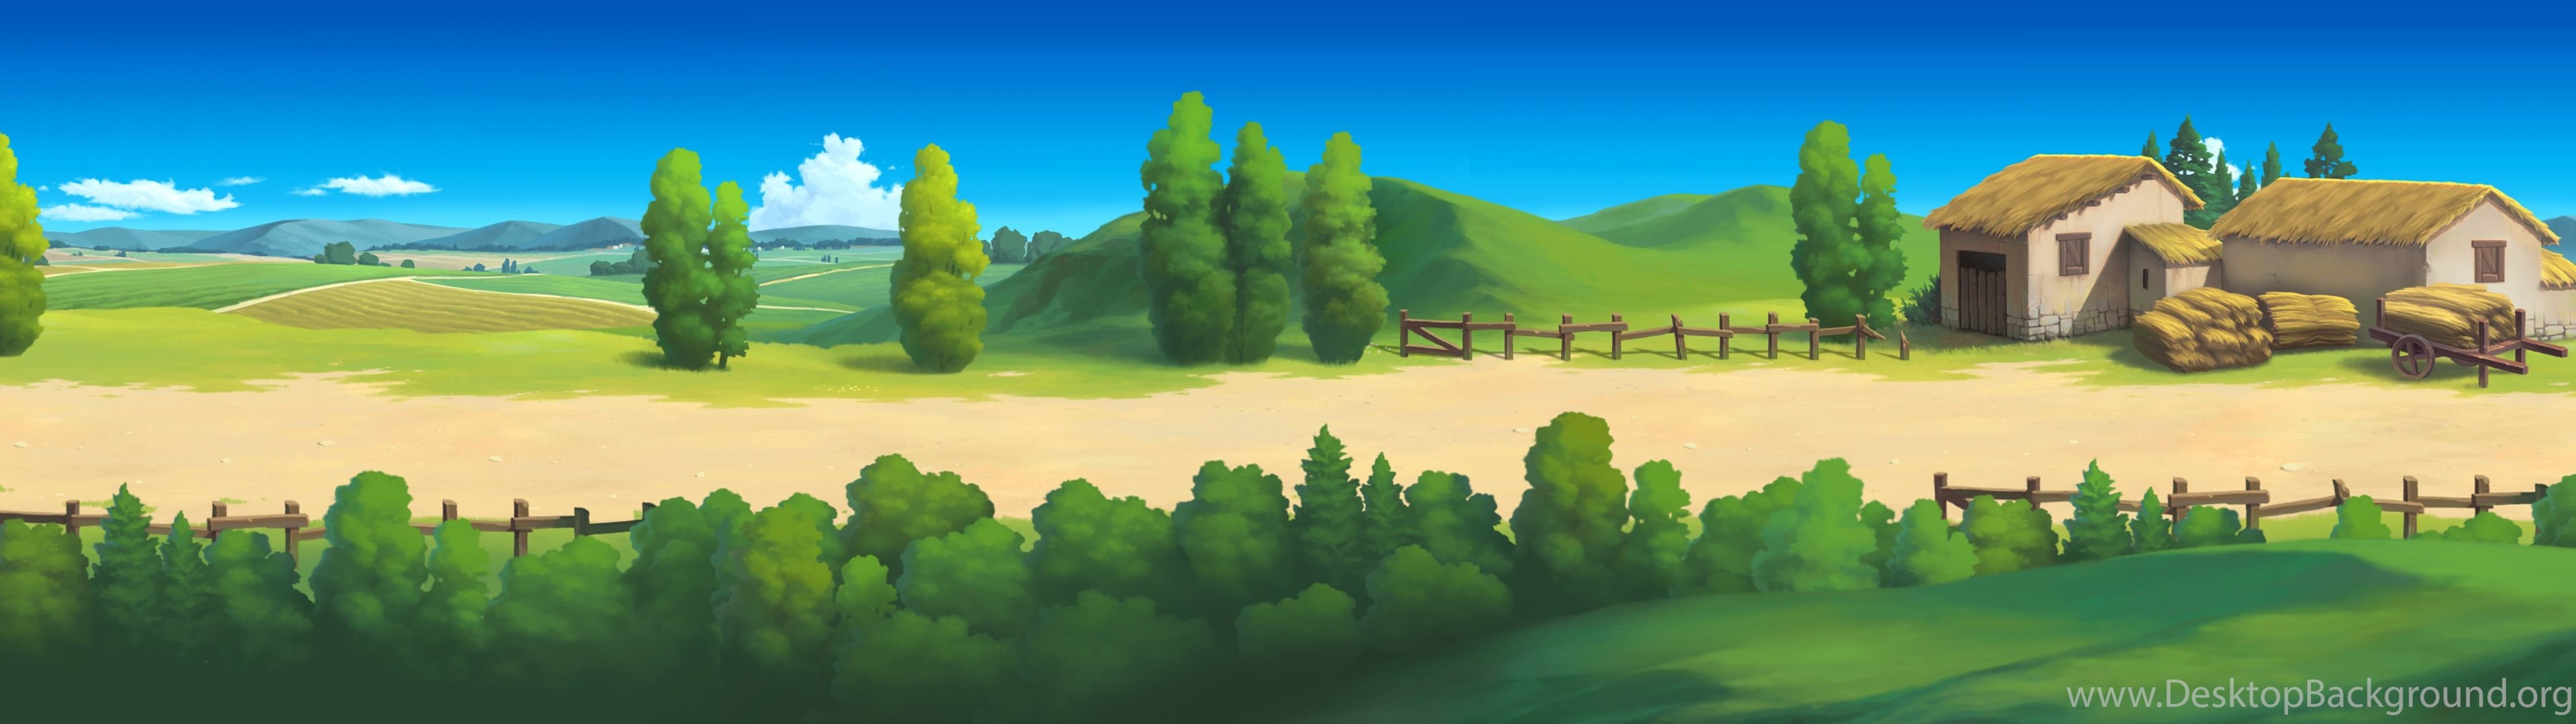 2D Game Background Resource By Painterhoya Desktop Background